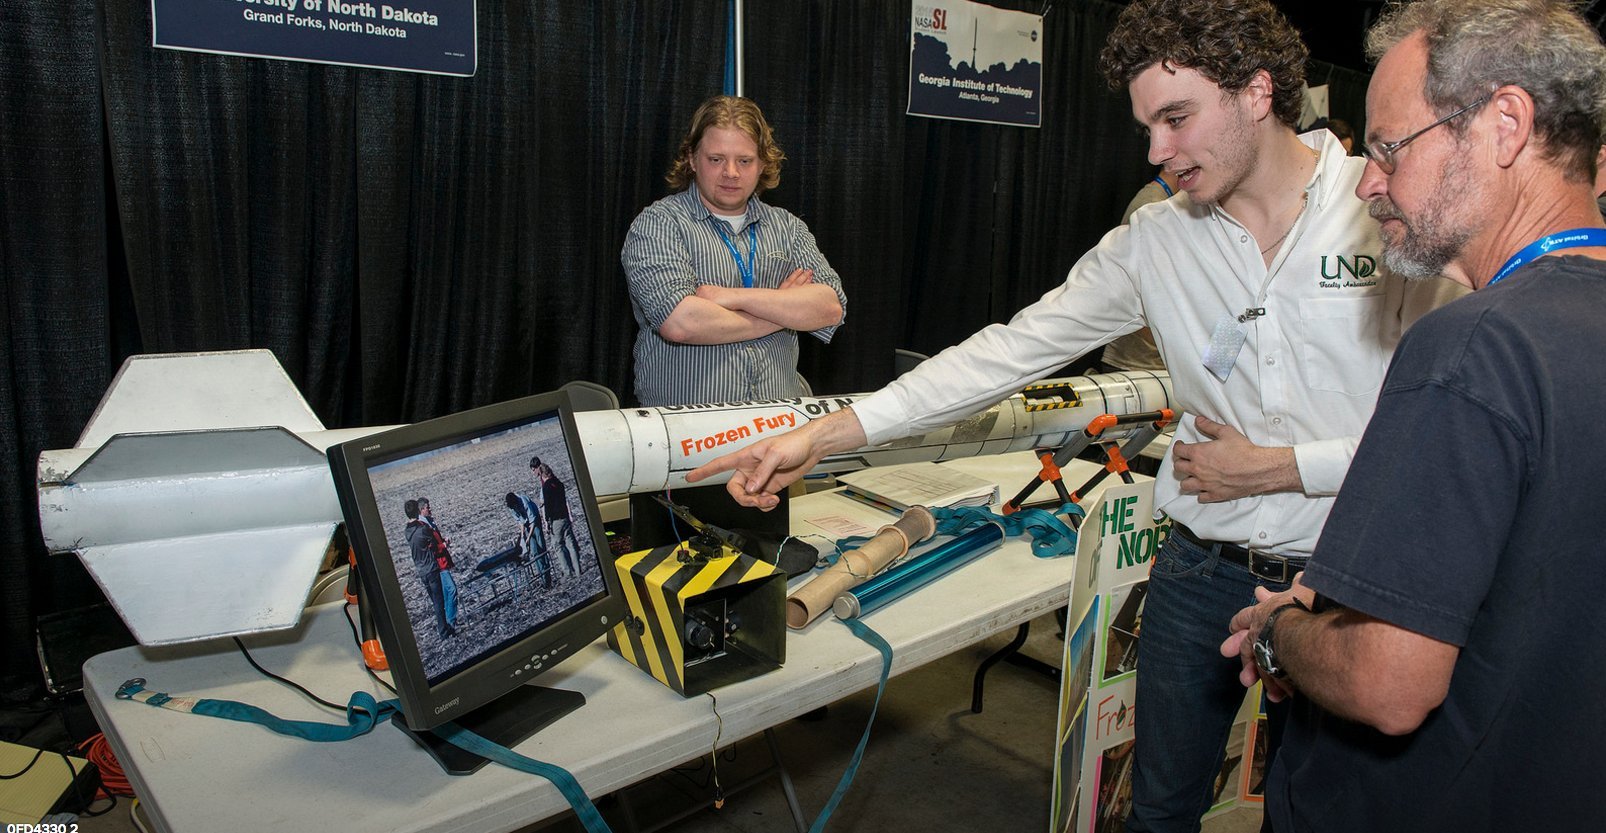 The University of North Dakota team explain their test-flight during the 2015 Student Launch rocket fair, held at NASA Marshall.